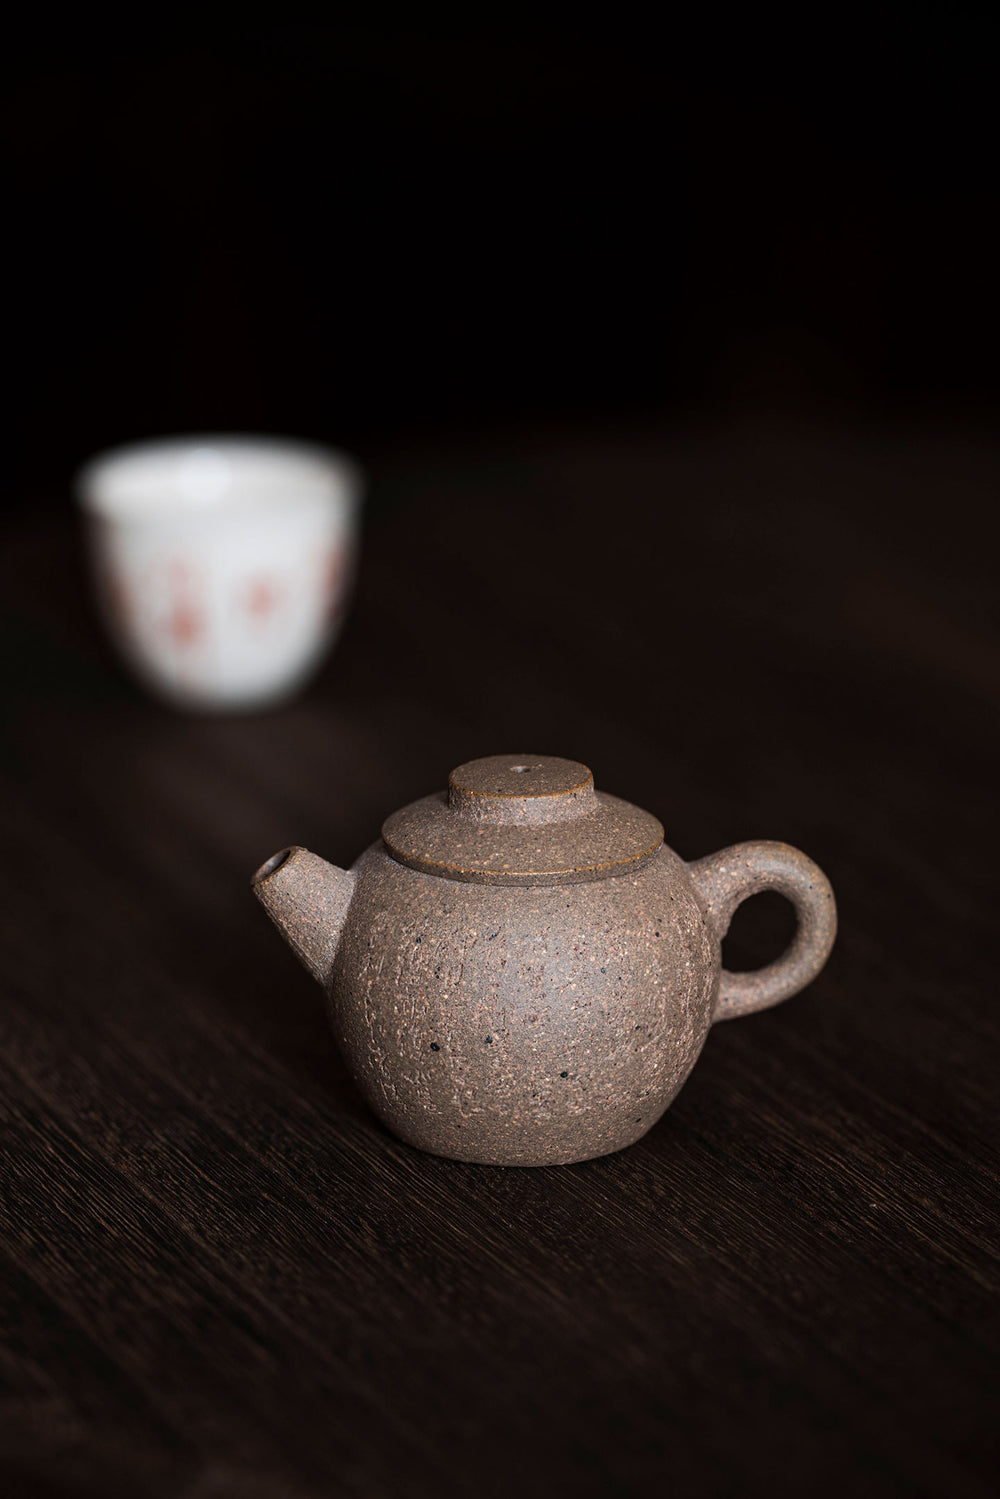 a round mini teapot on a dark wooden surface